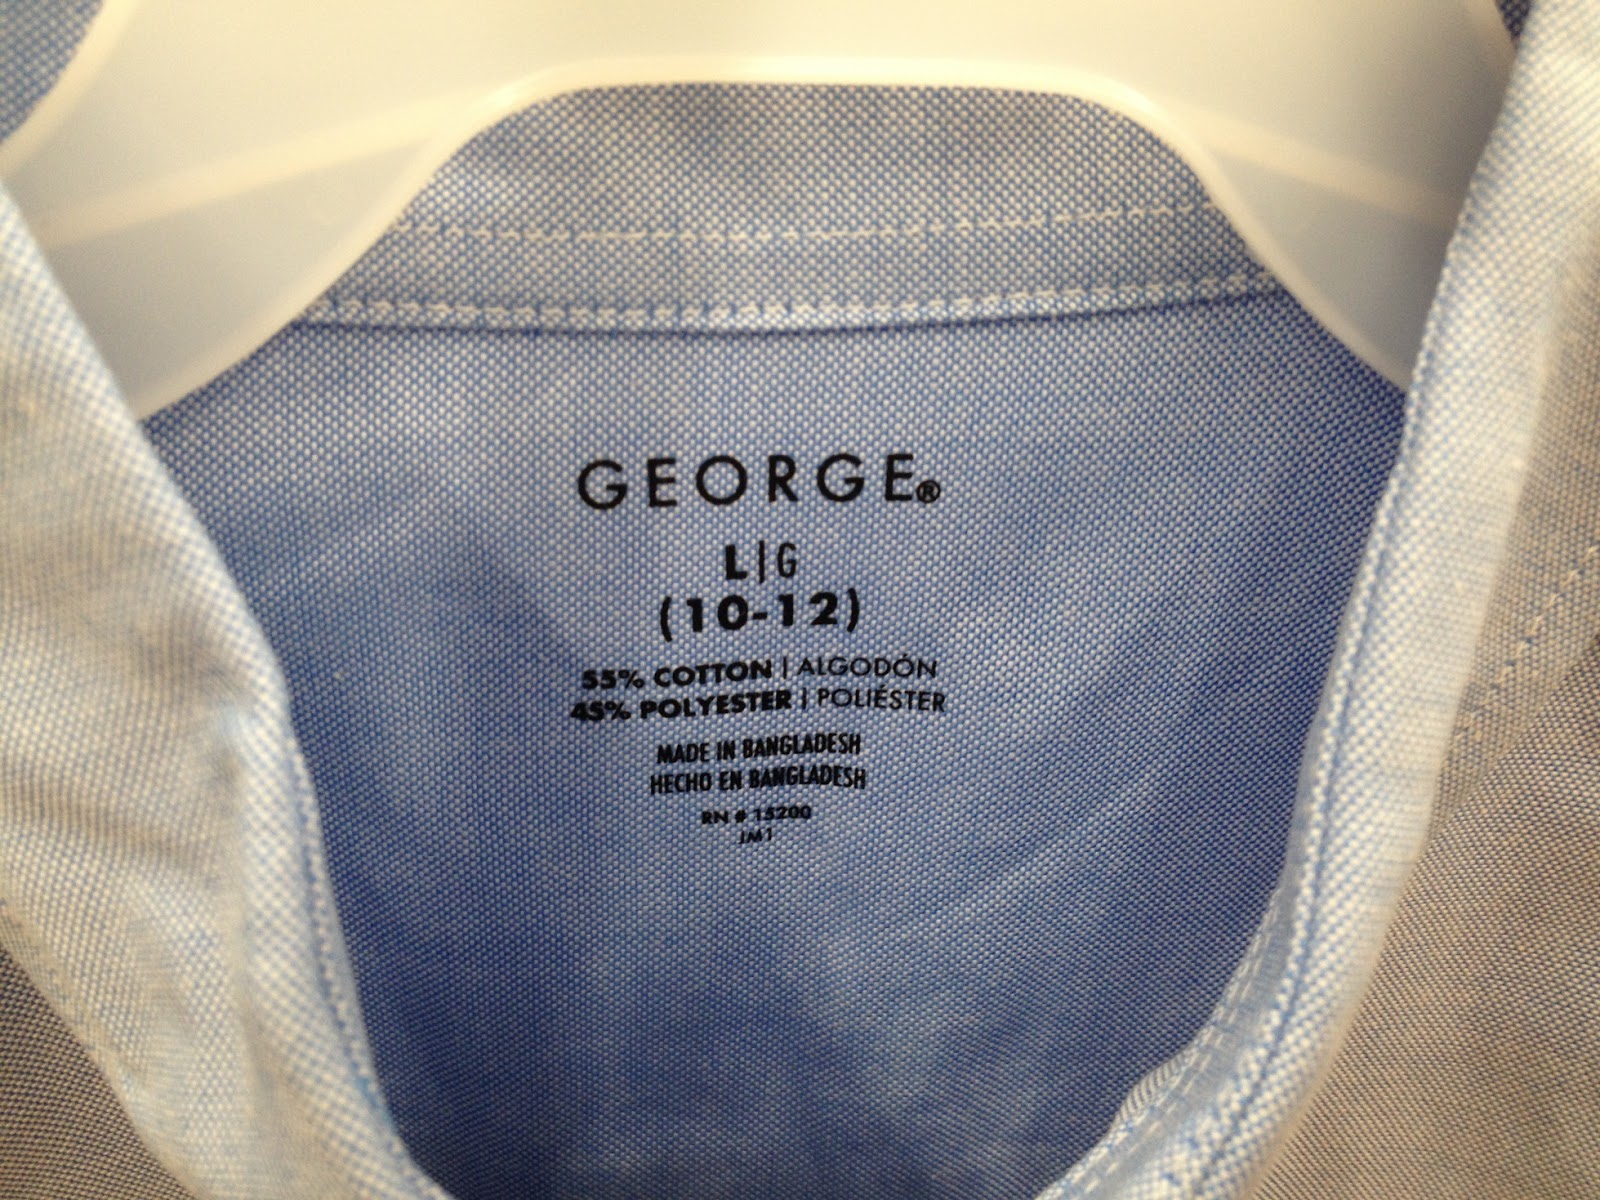 Product of Bangladesh: George Men's Dress Shirt